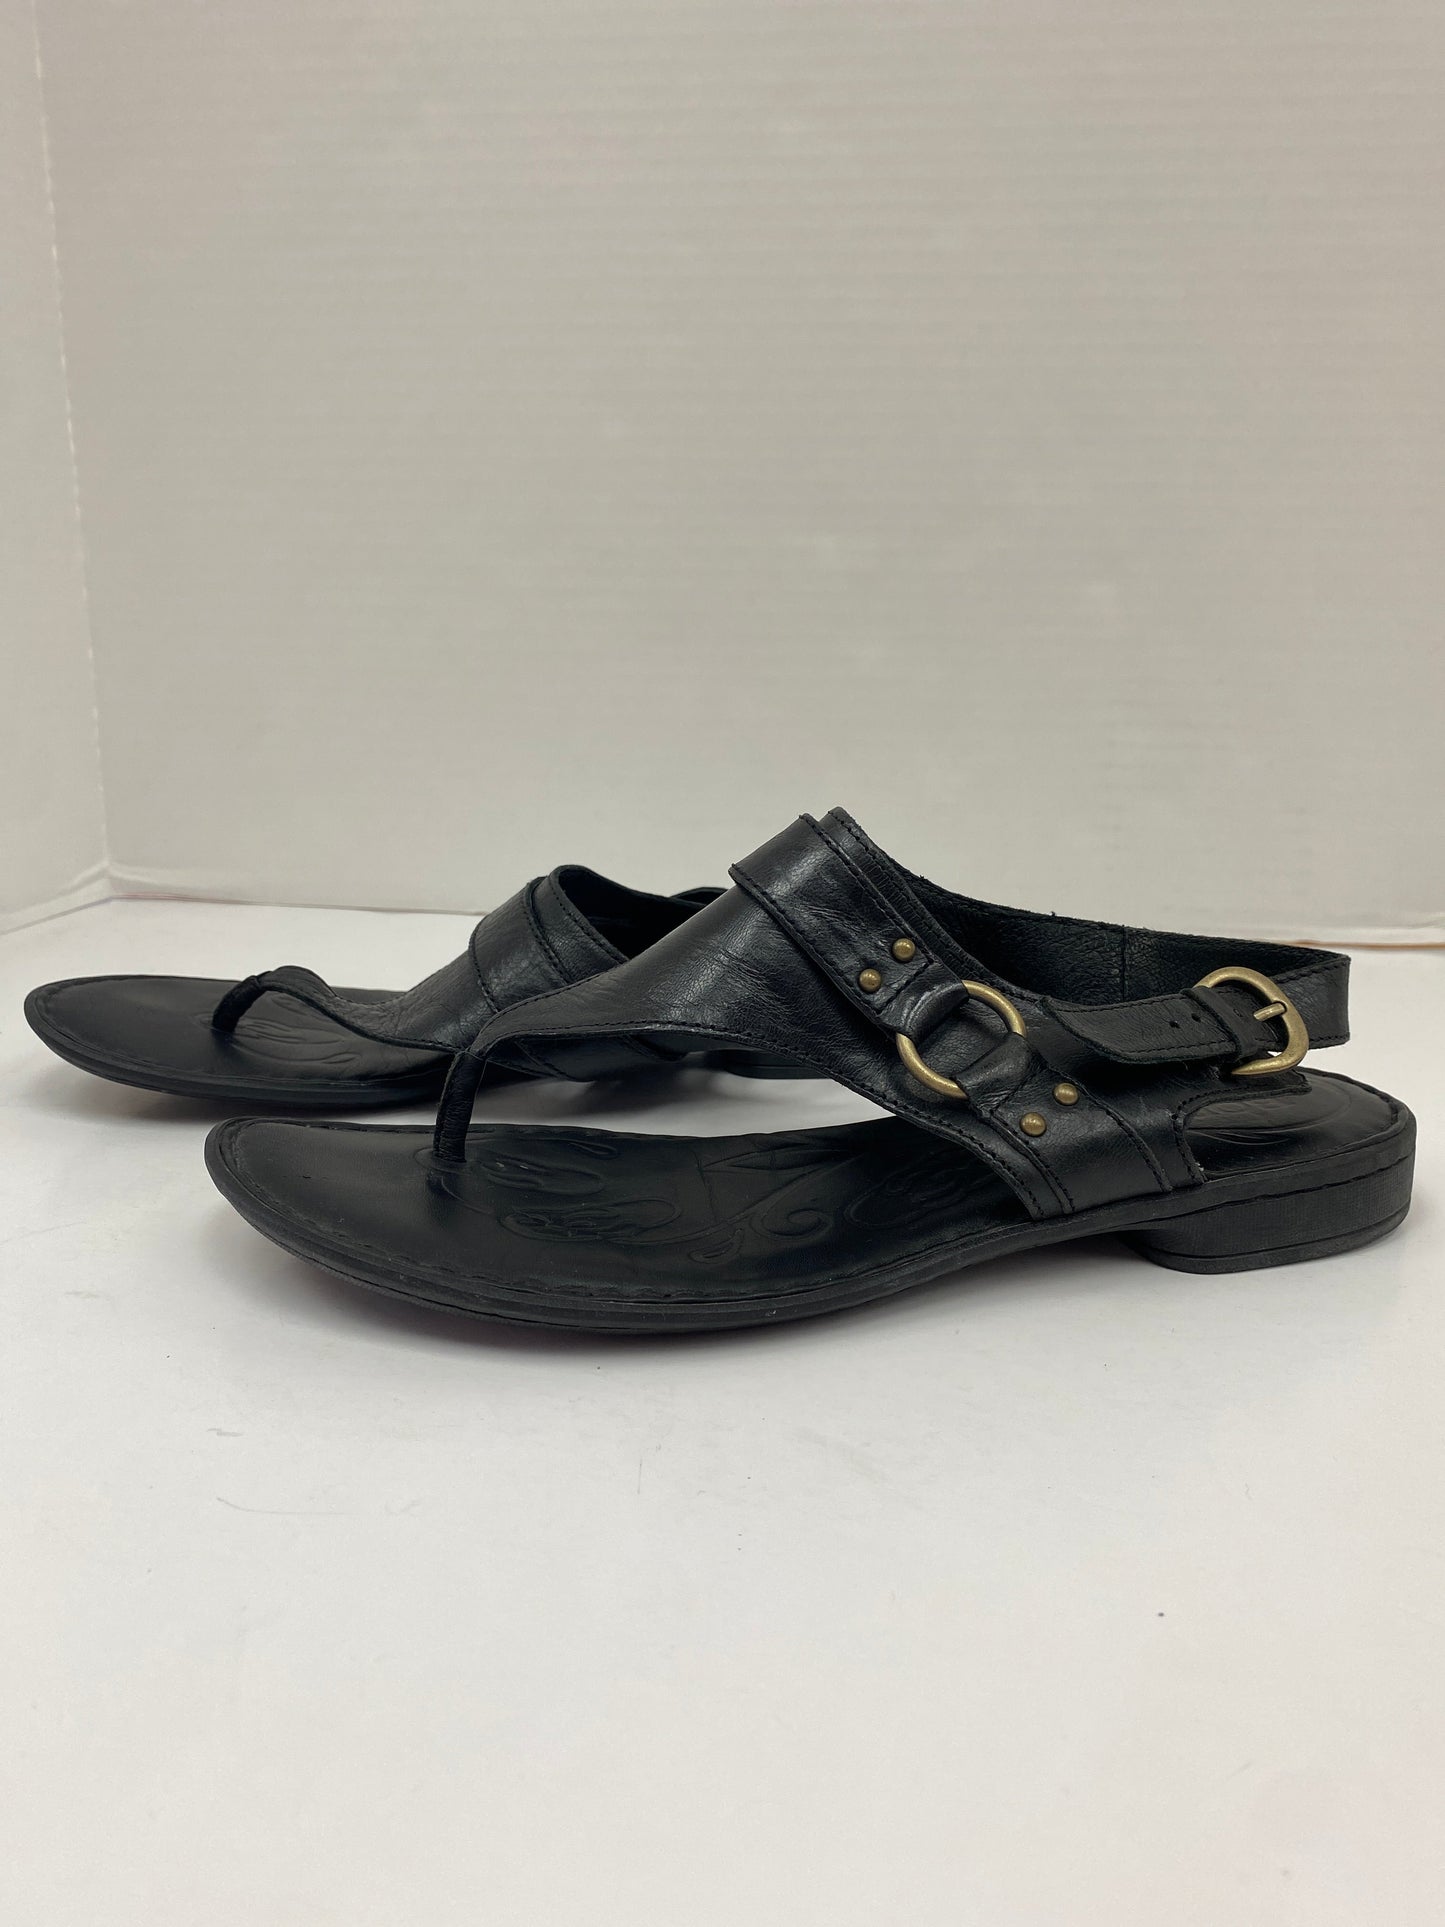 Black Sandals Flats Born, Size 9